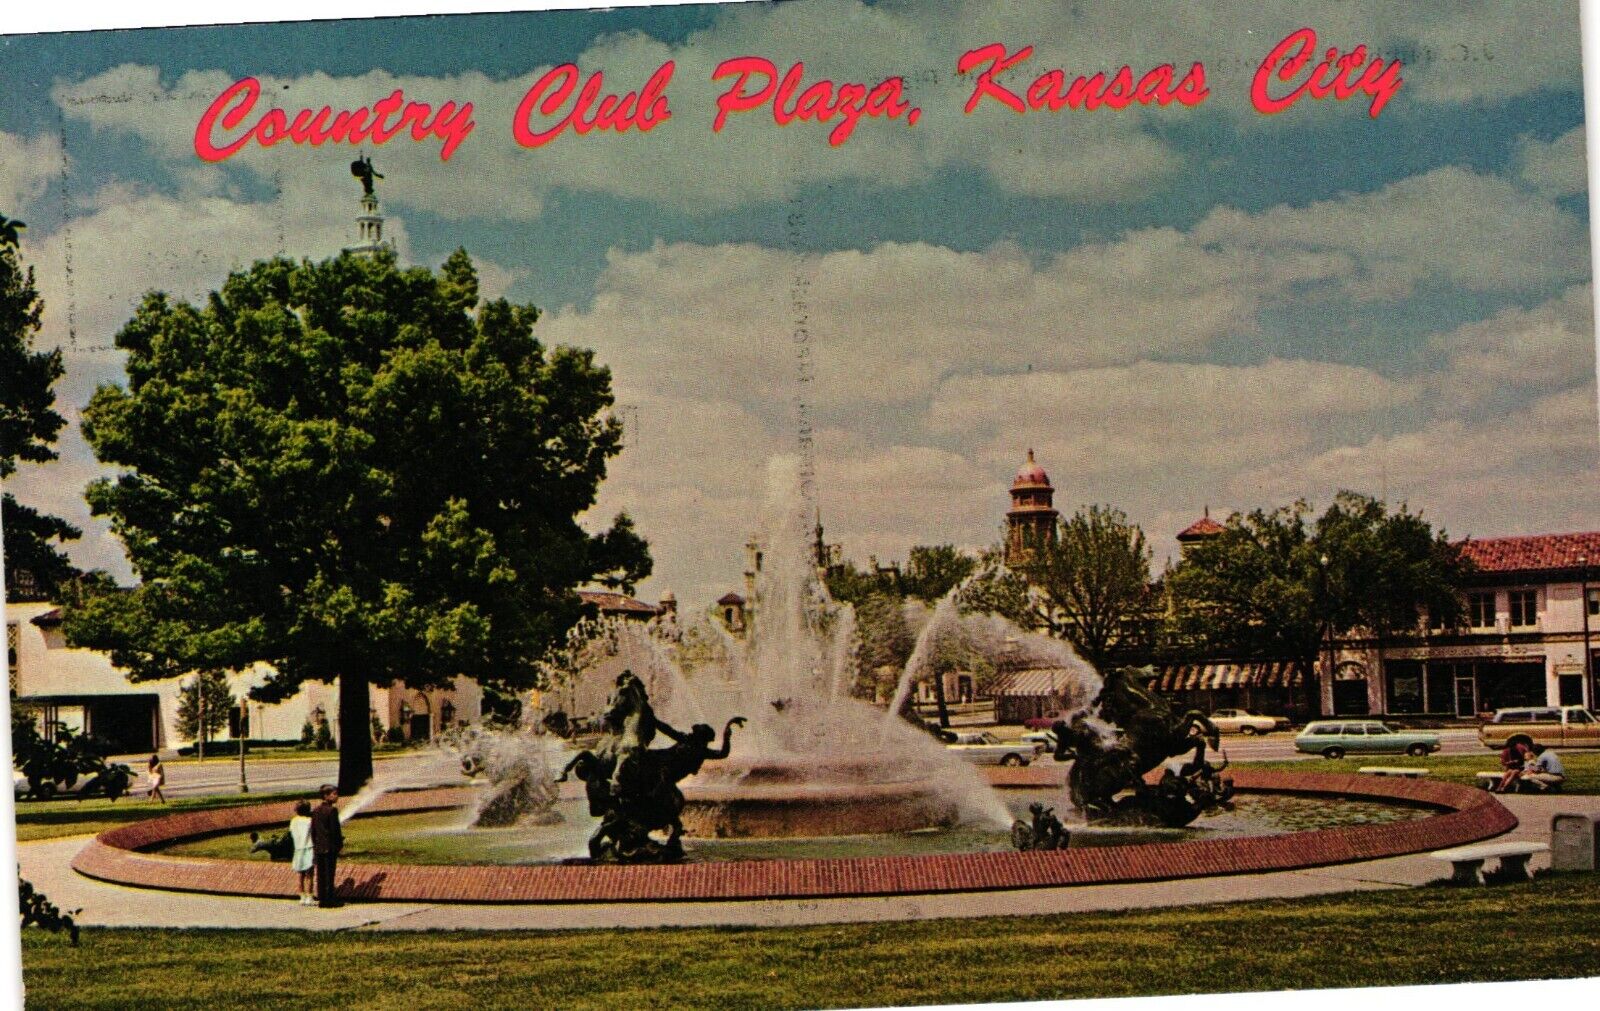 JC Nichols Fountain Country Club Plaza Kansas City Vintage Postcard Un-Posted